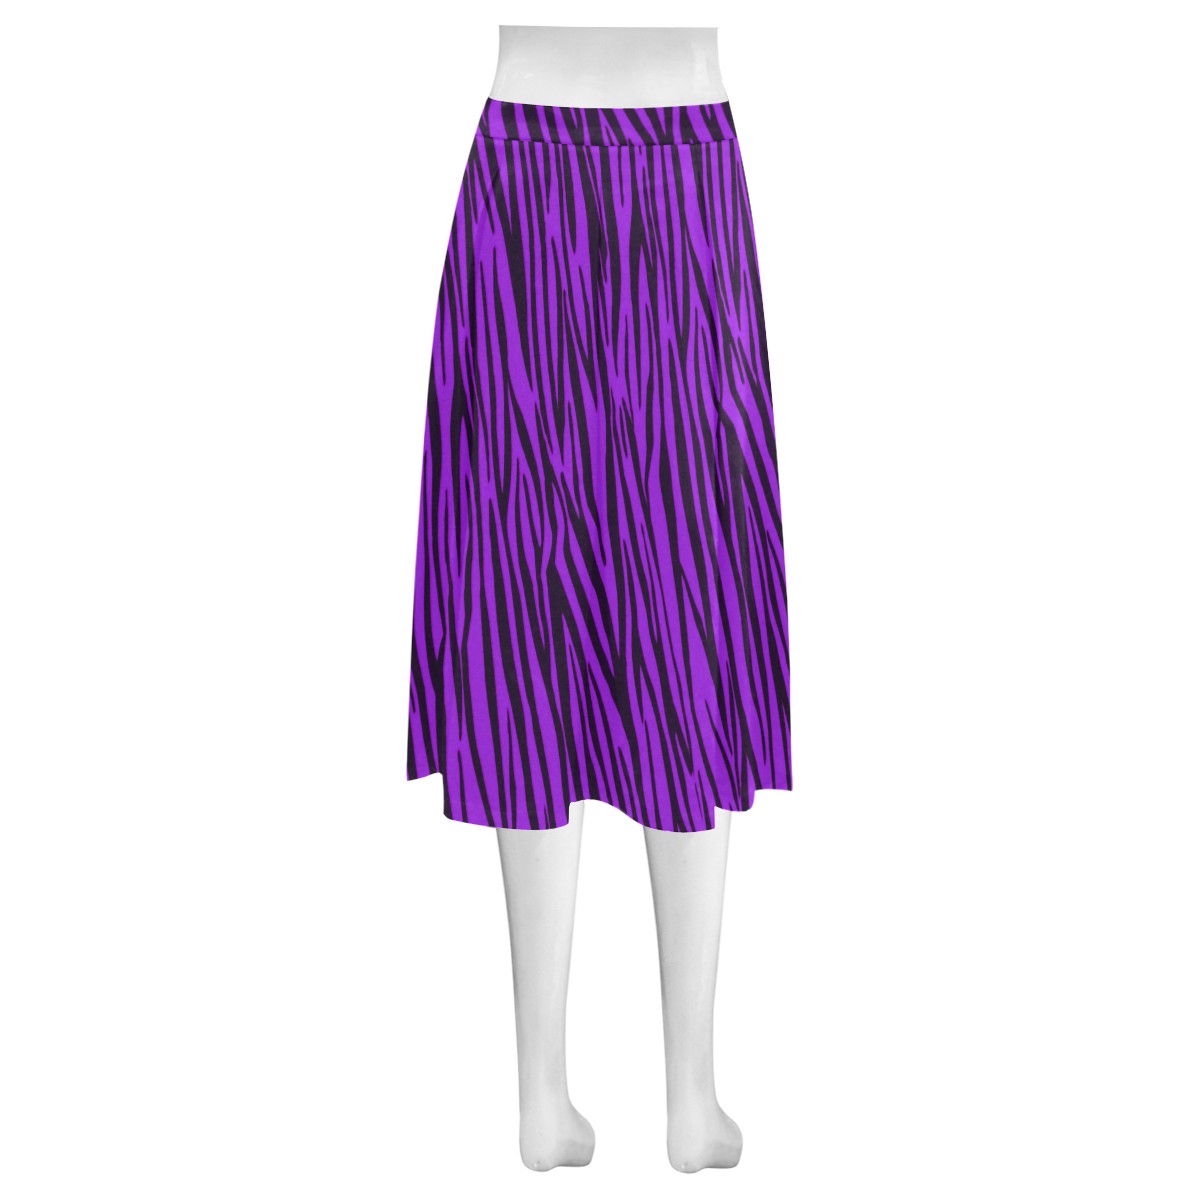 Purple Zebra Stripes Fur Mnemosyne Women's Crepe Skirt (Model D16)